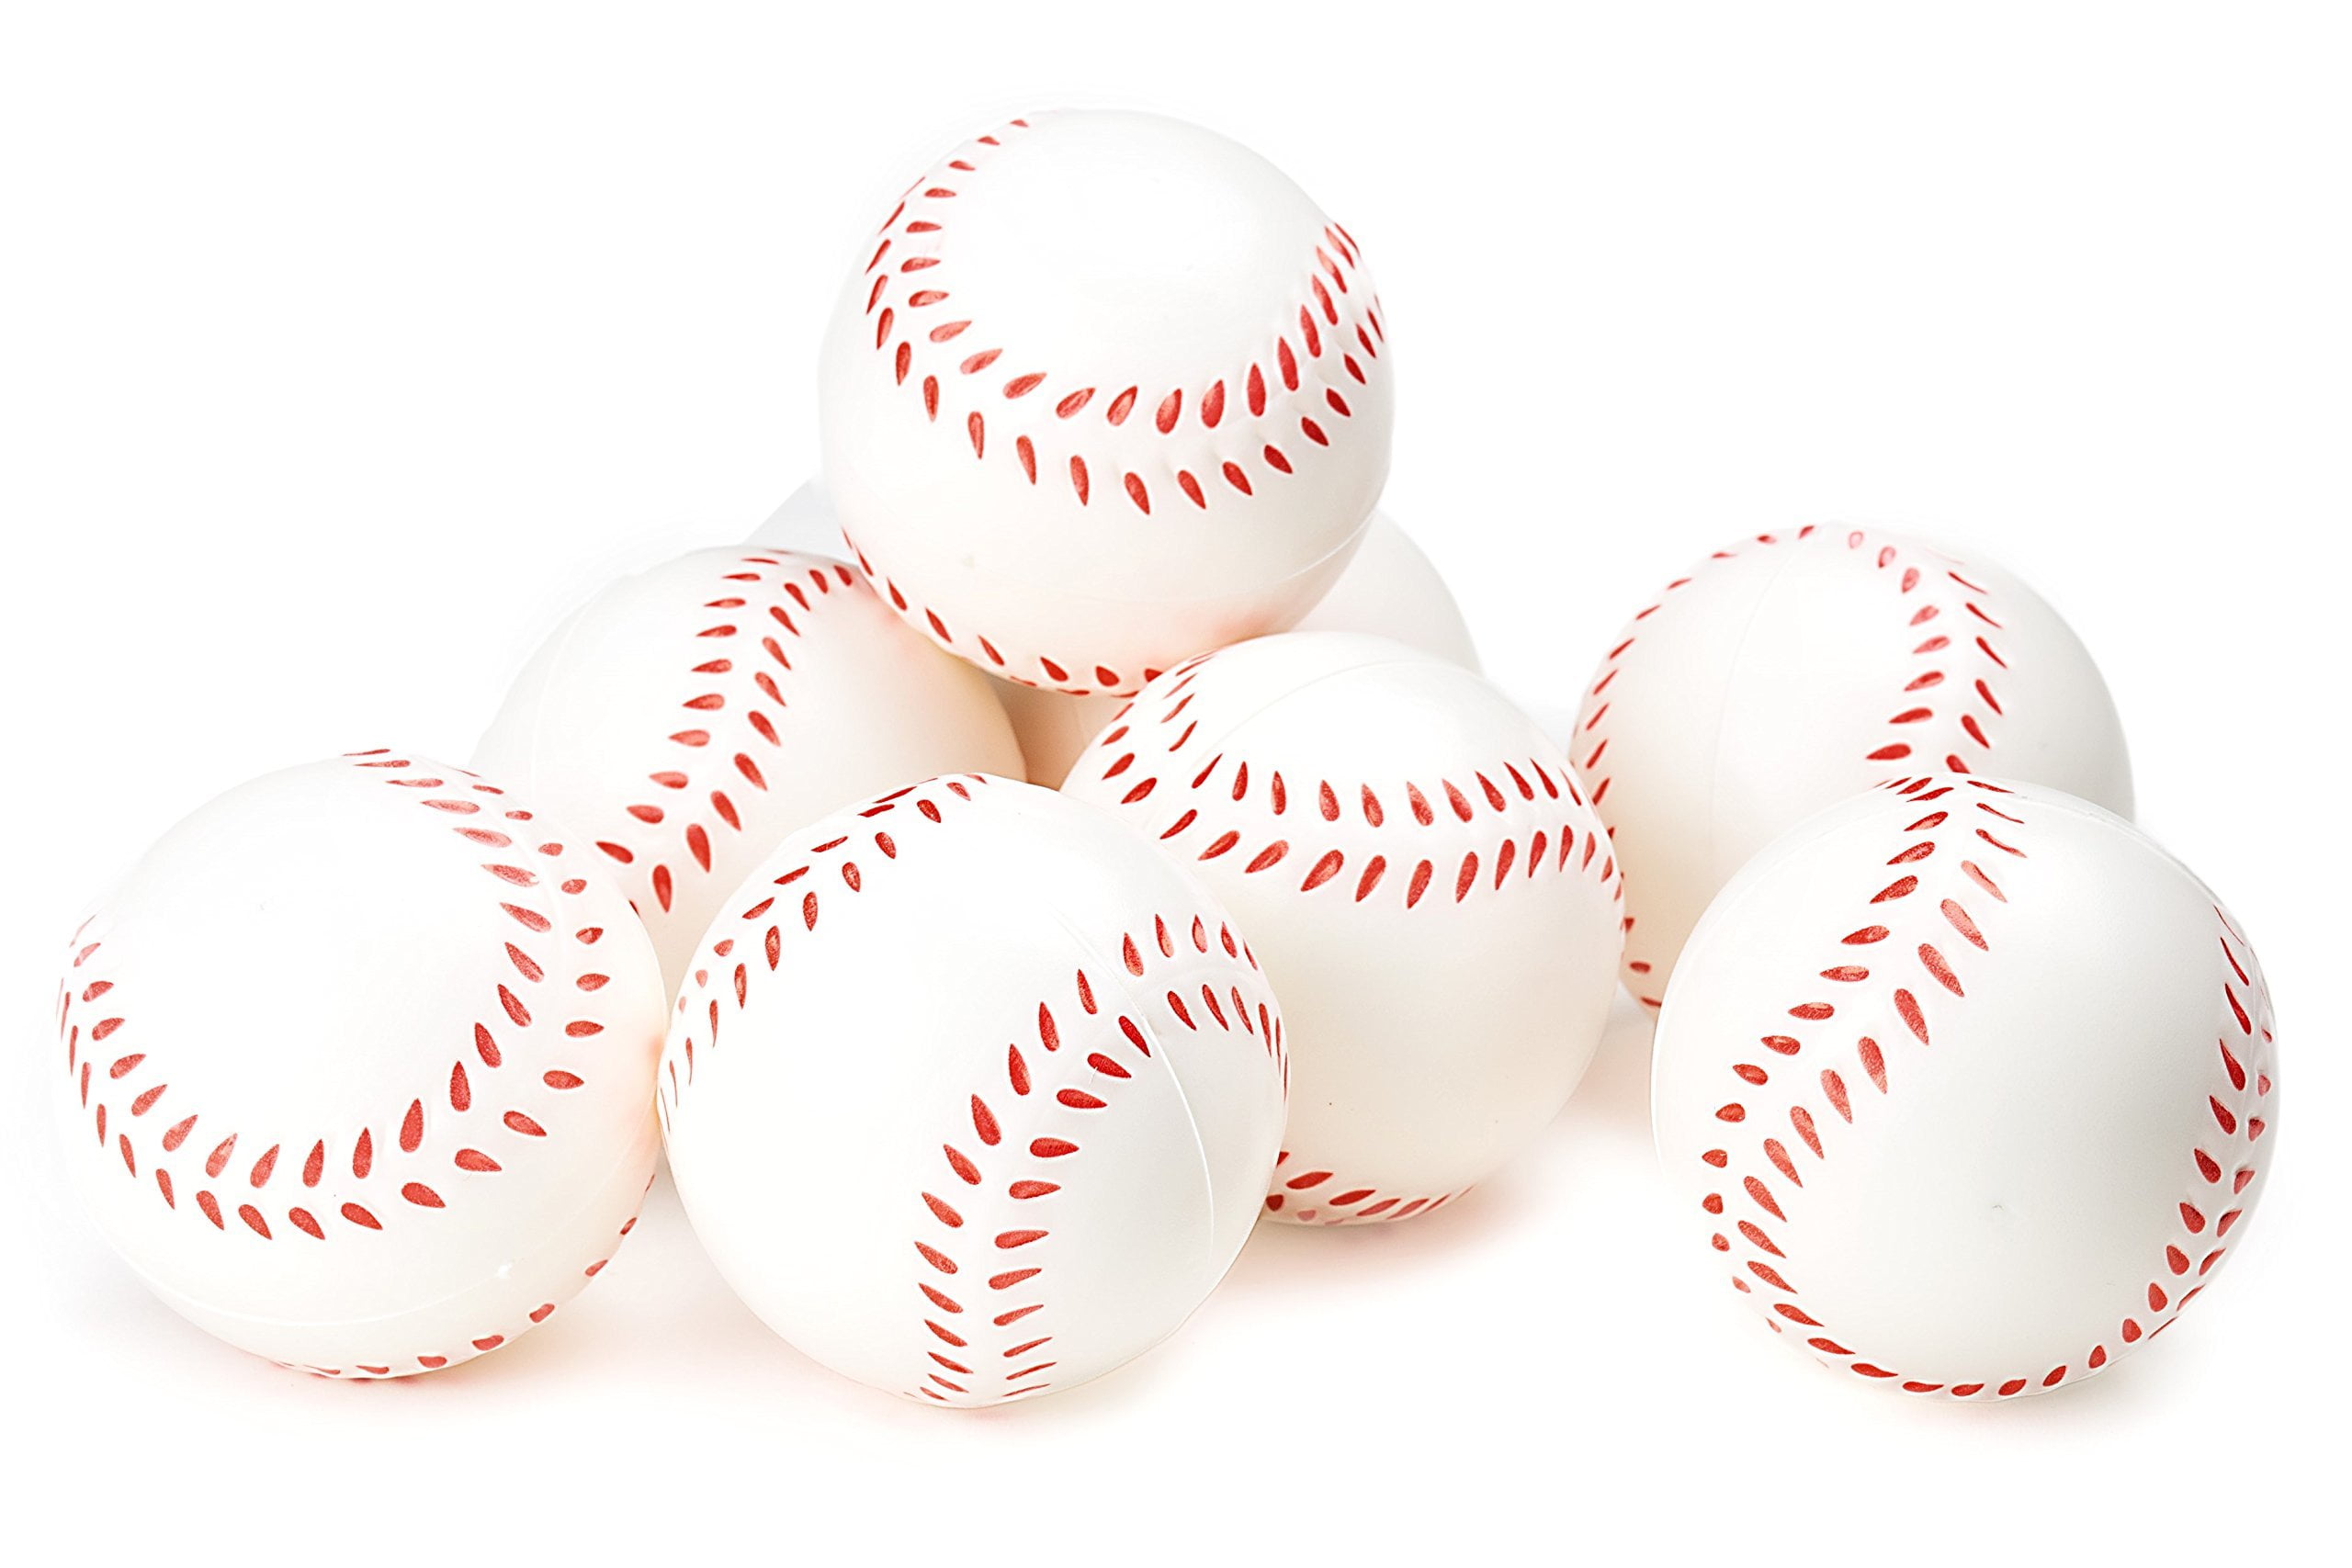 Soft Sponge Sport Practice & Trainning Base Ball Squeeze BaseBall Softball 